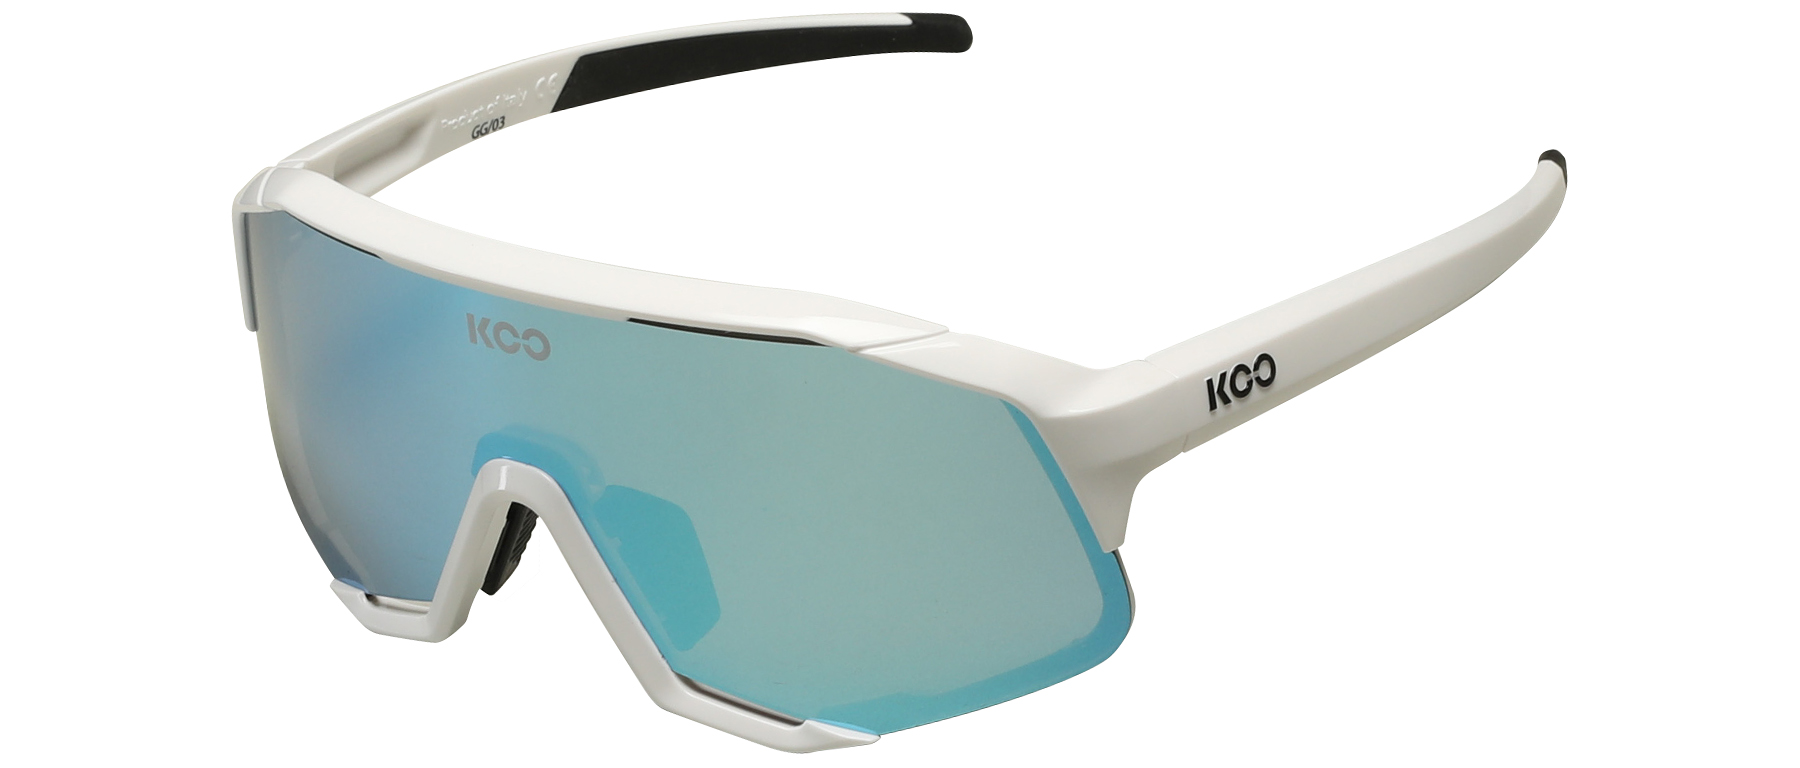 KASK Koo Demos Eyewear